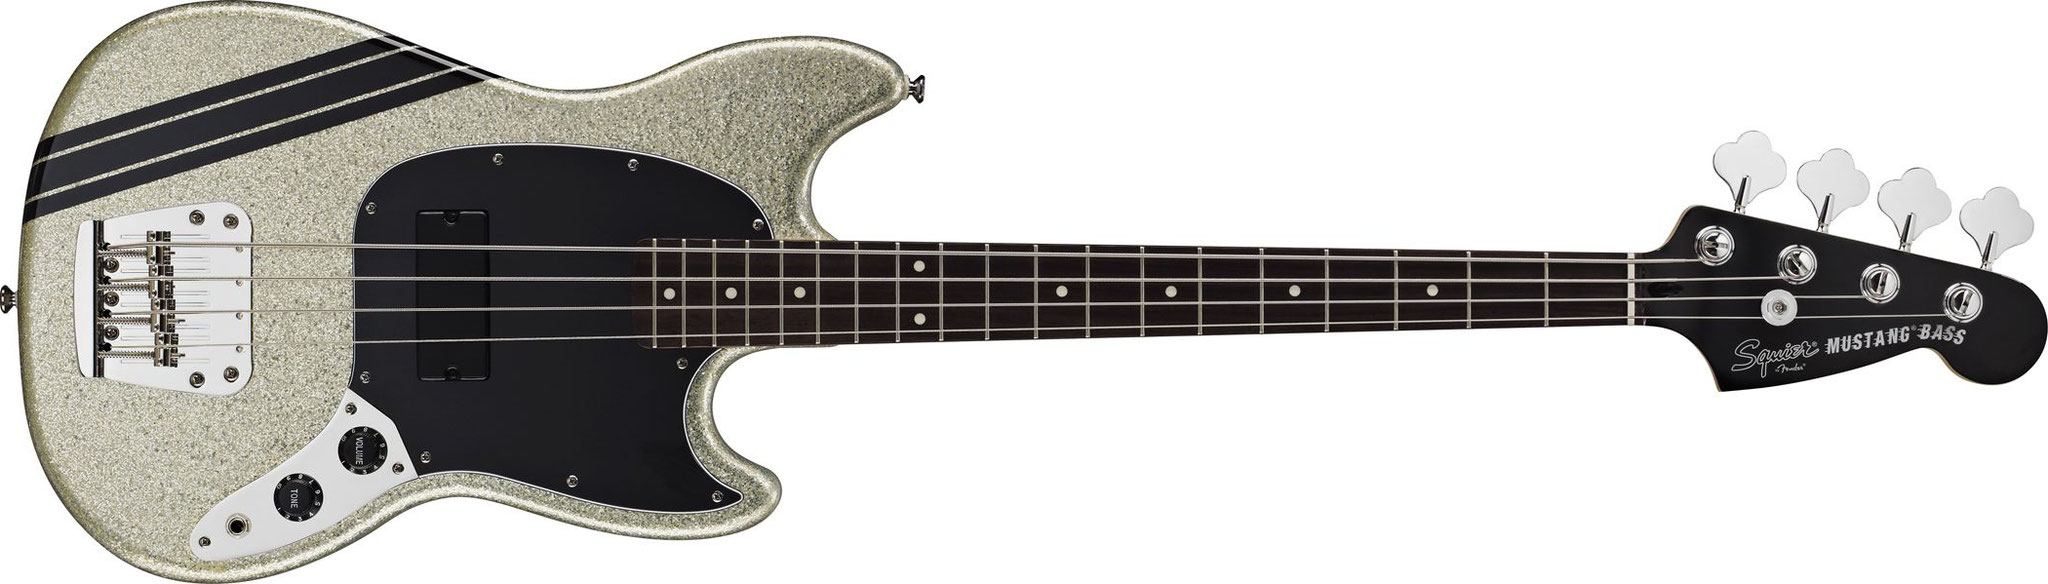 Mikey Way Mustang Bass